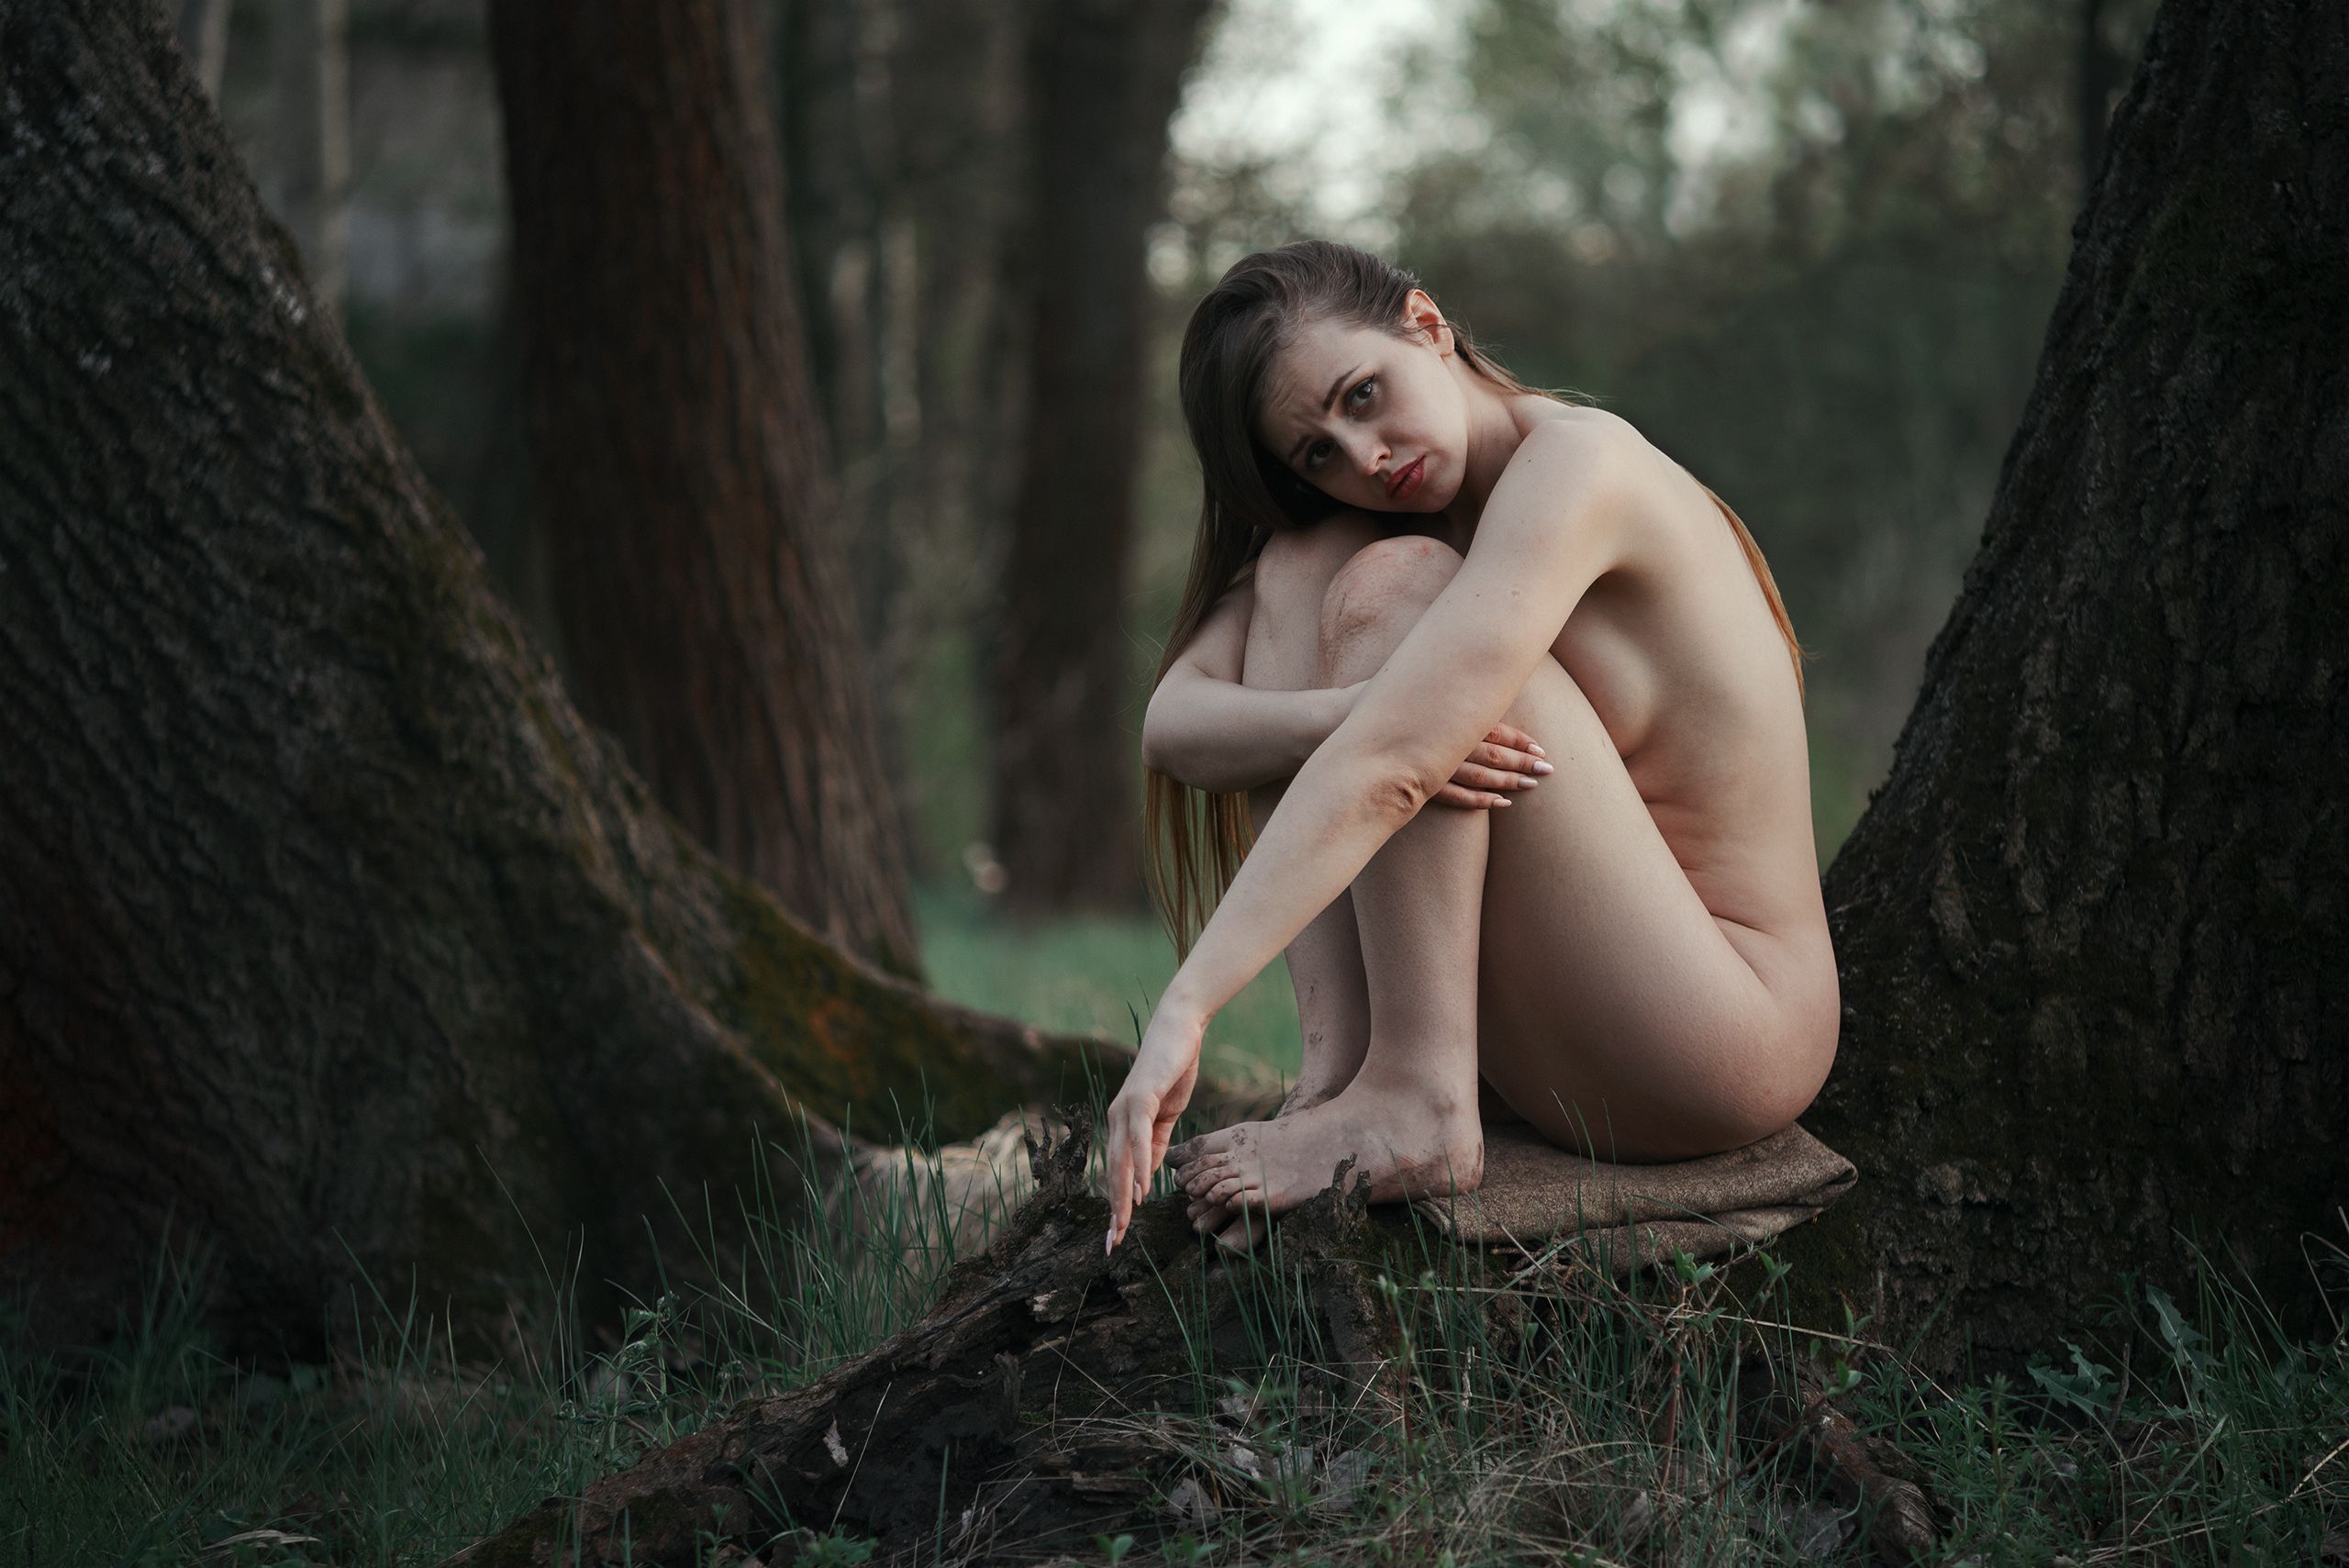 Girl, nude, в лесу, арт, ню, outdoors, Артемьев Алексей